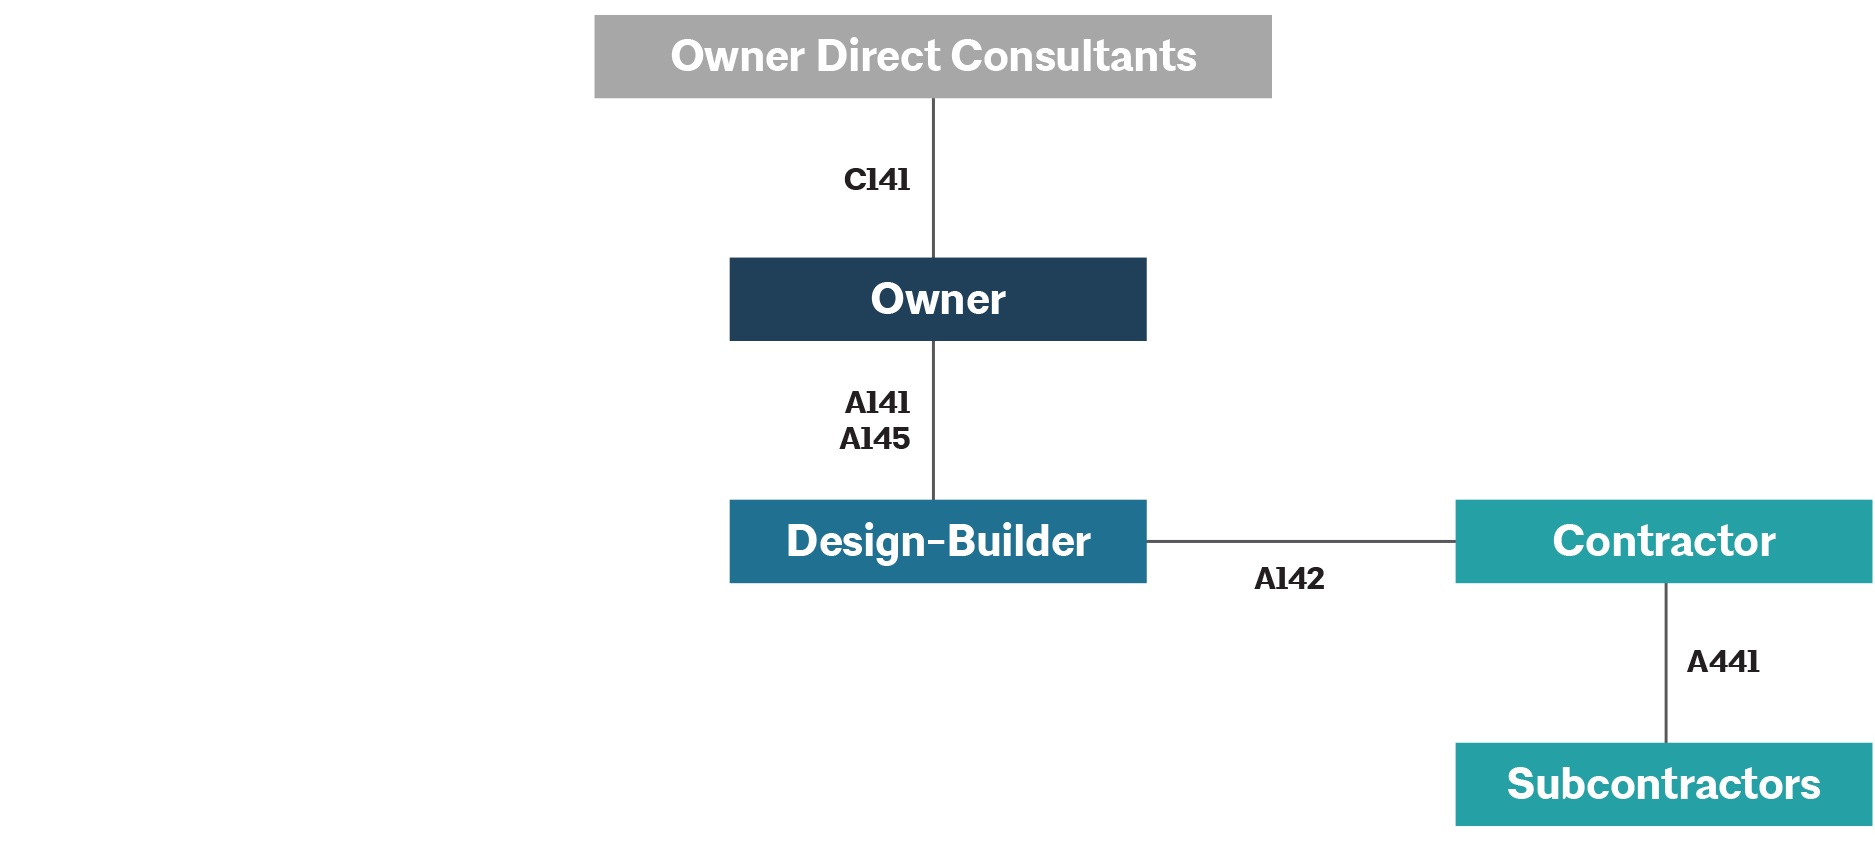 Design-Builder hires Construction